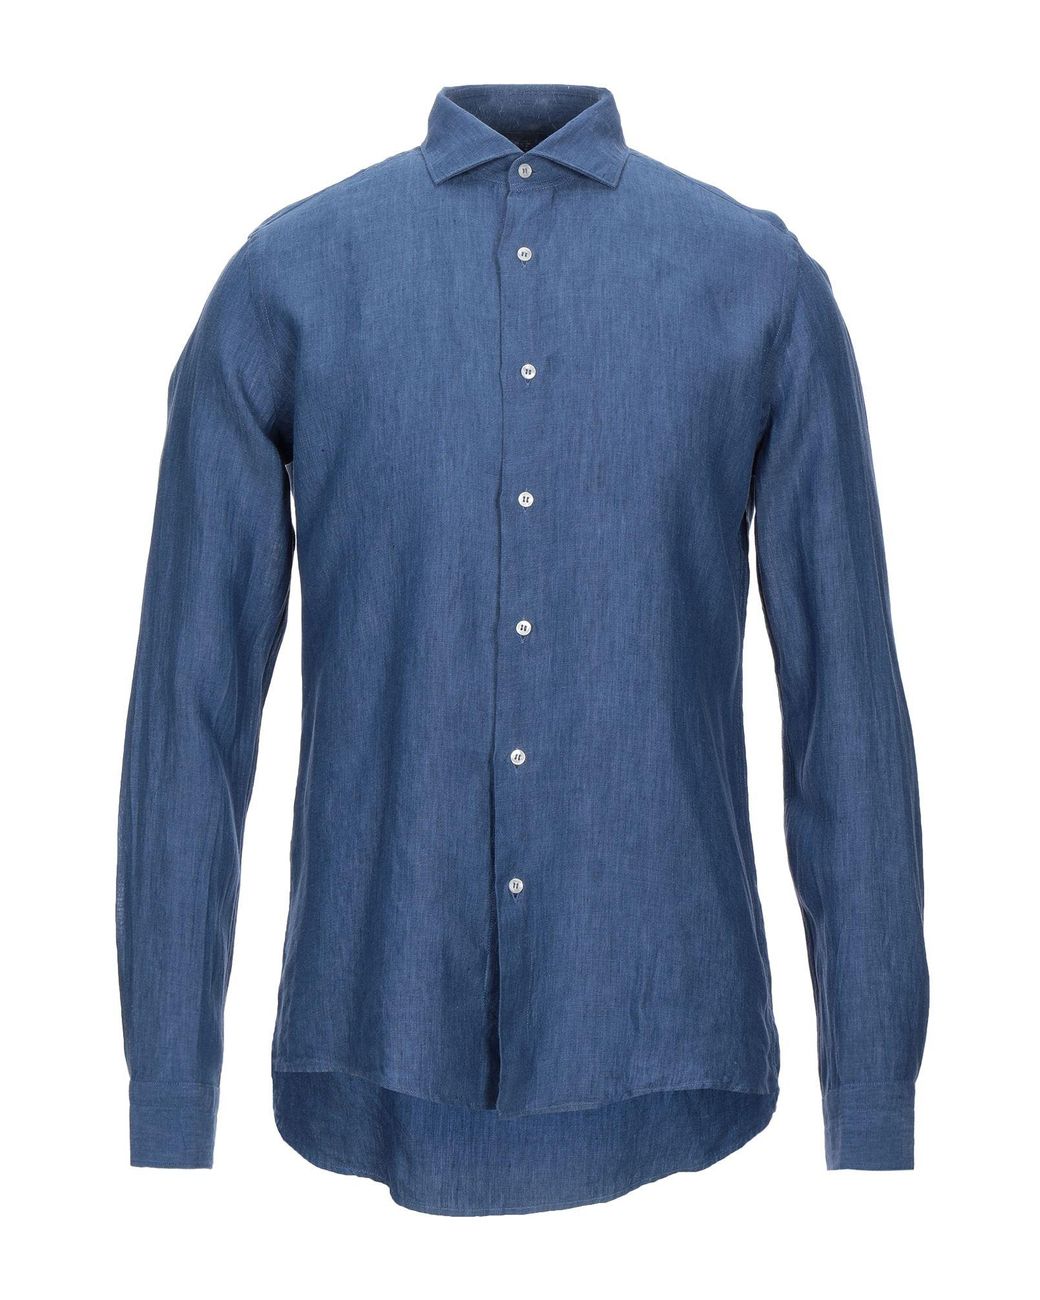 Emanuel Ungaro Shirt in Blue for Men - Lyst